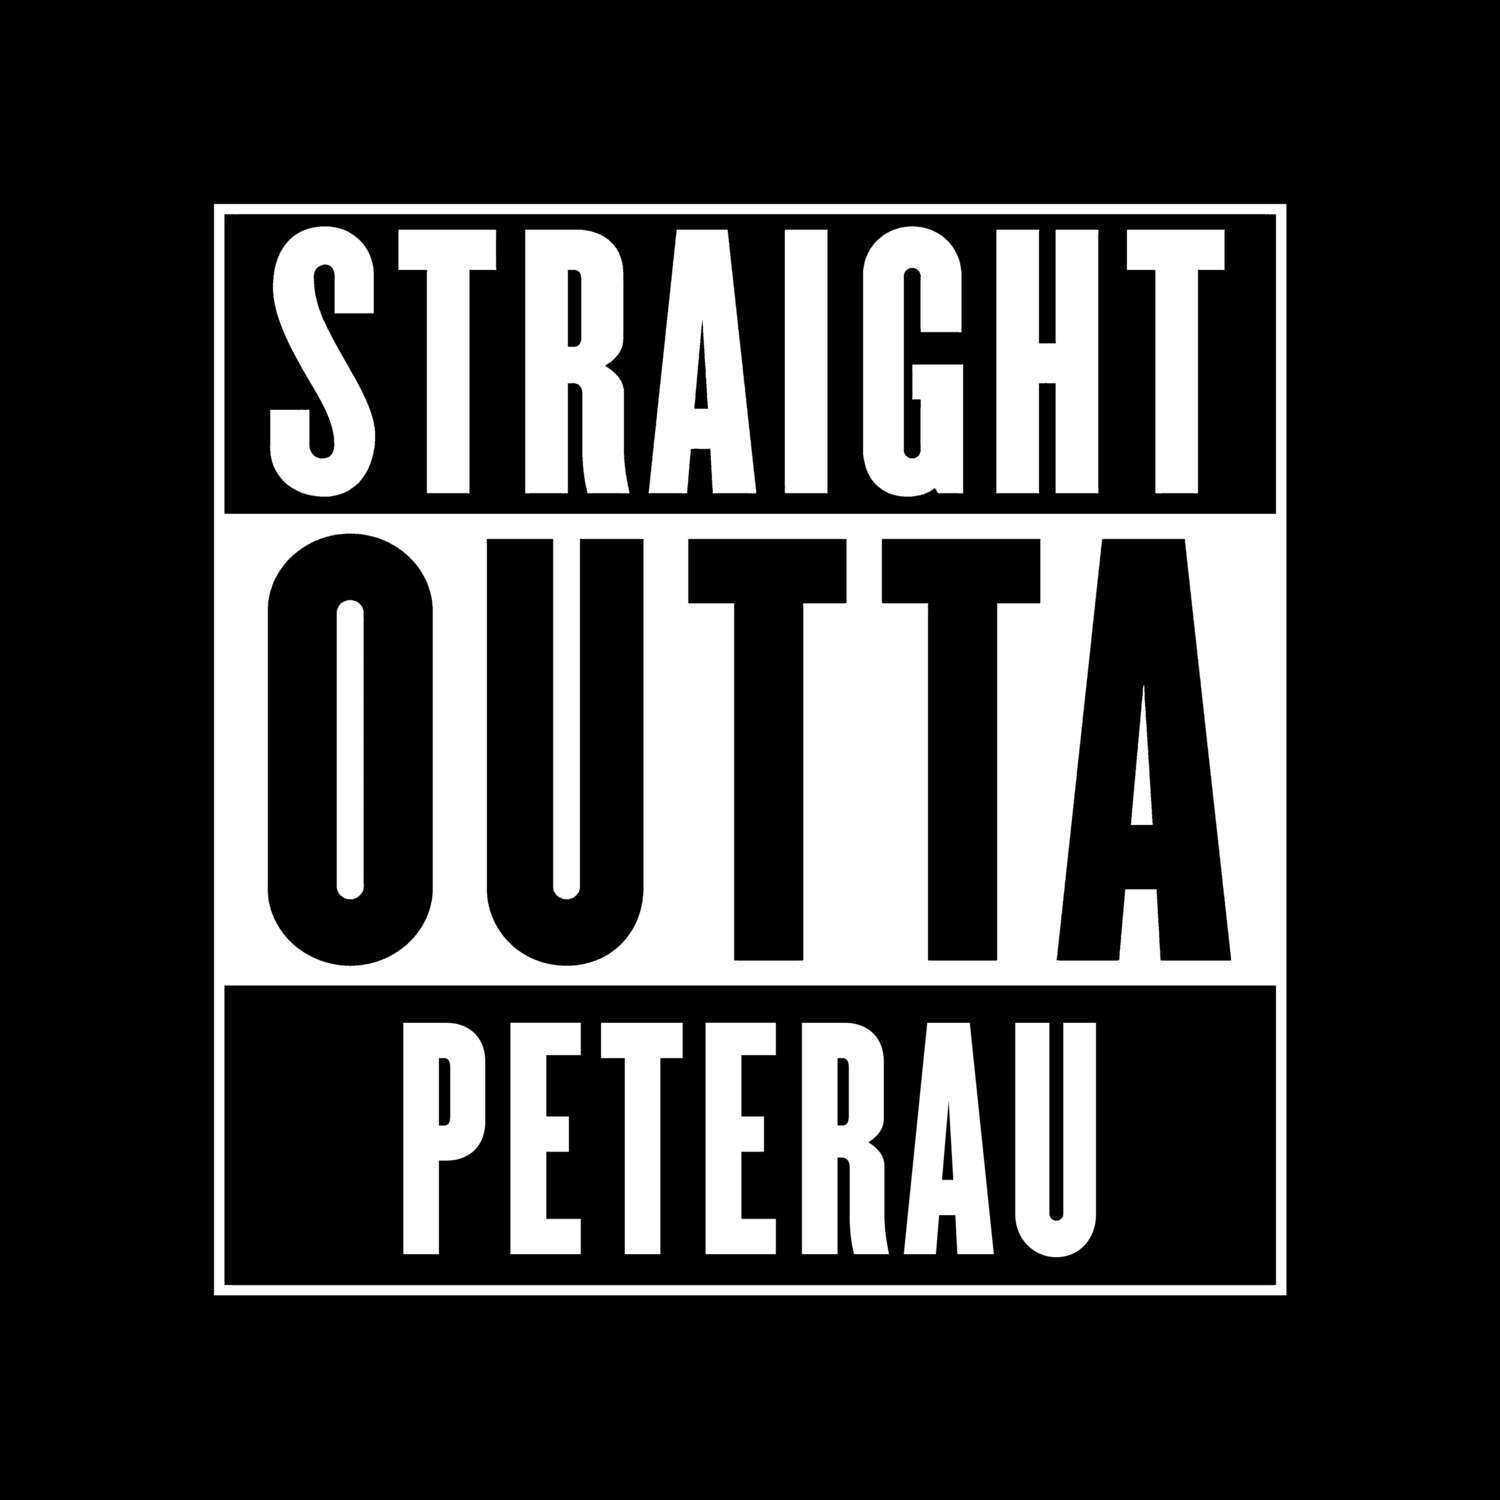 Peterau T-Shirt »Straight Outta«